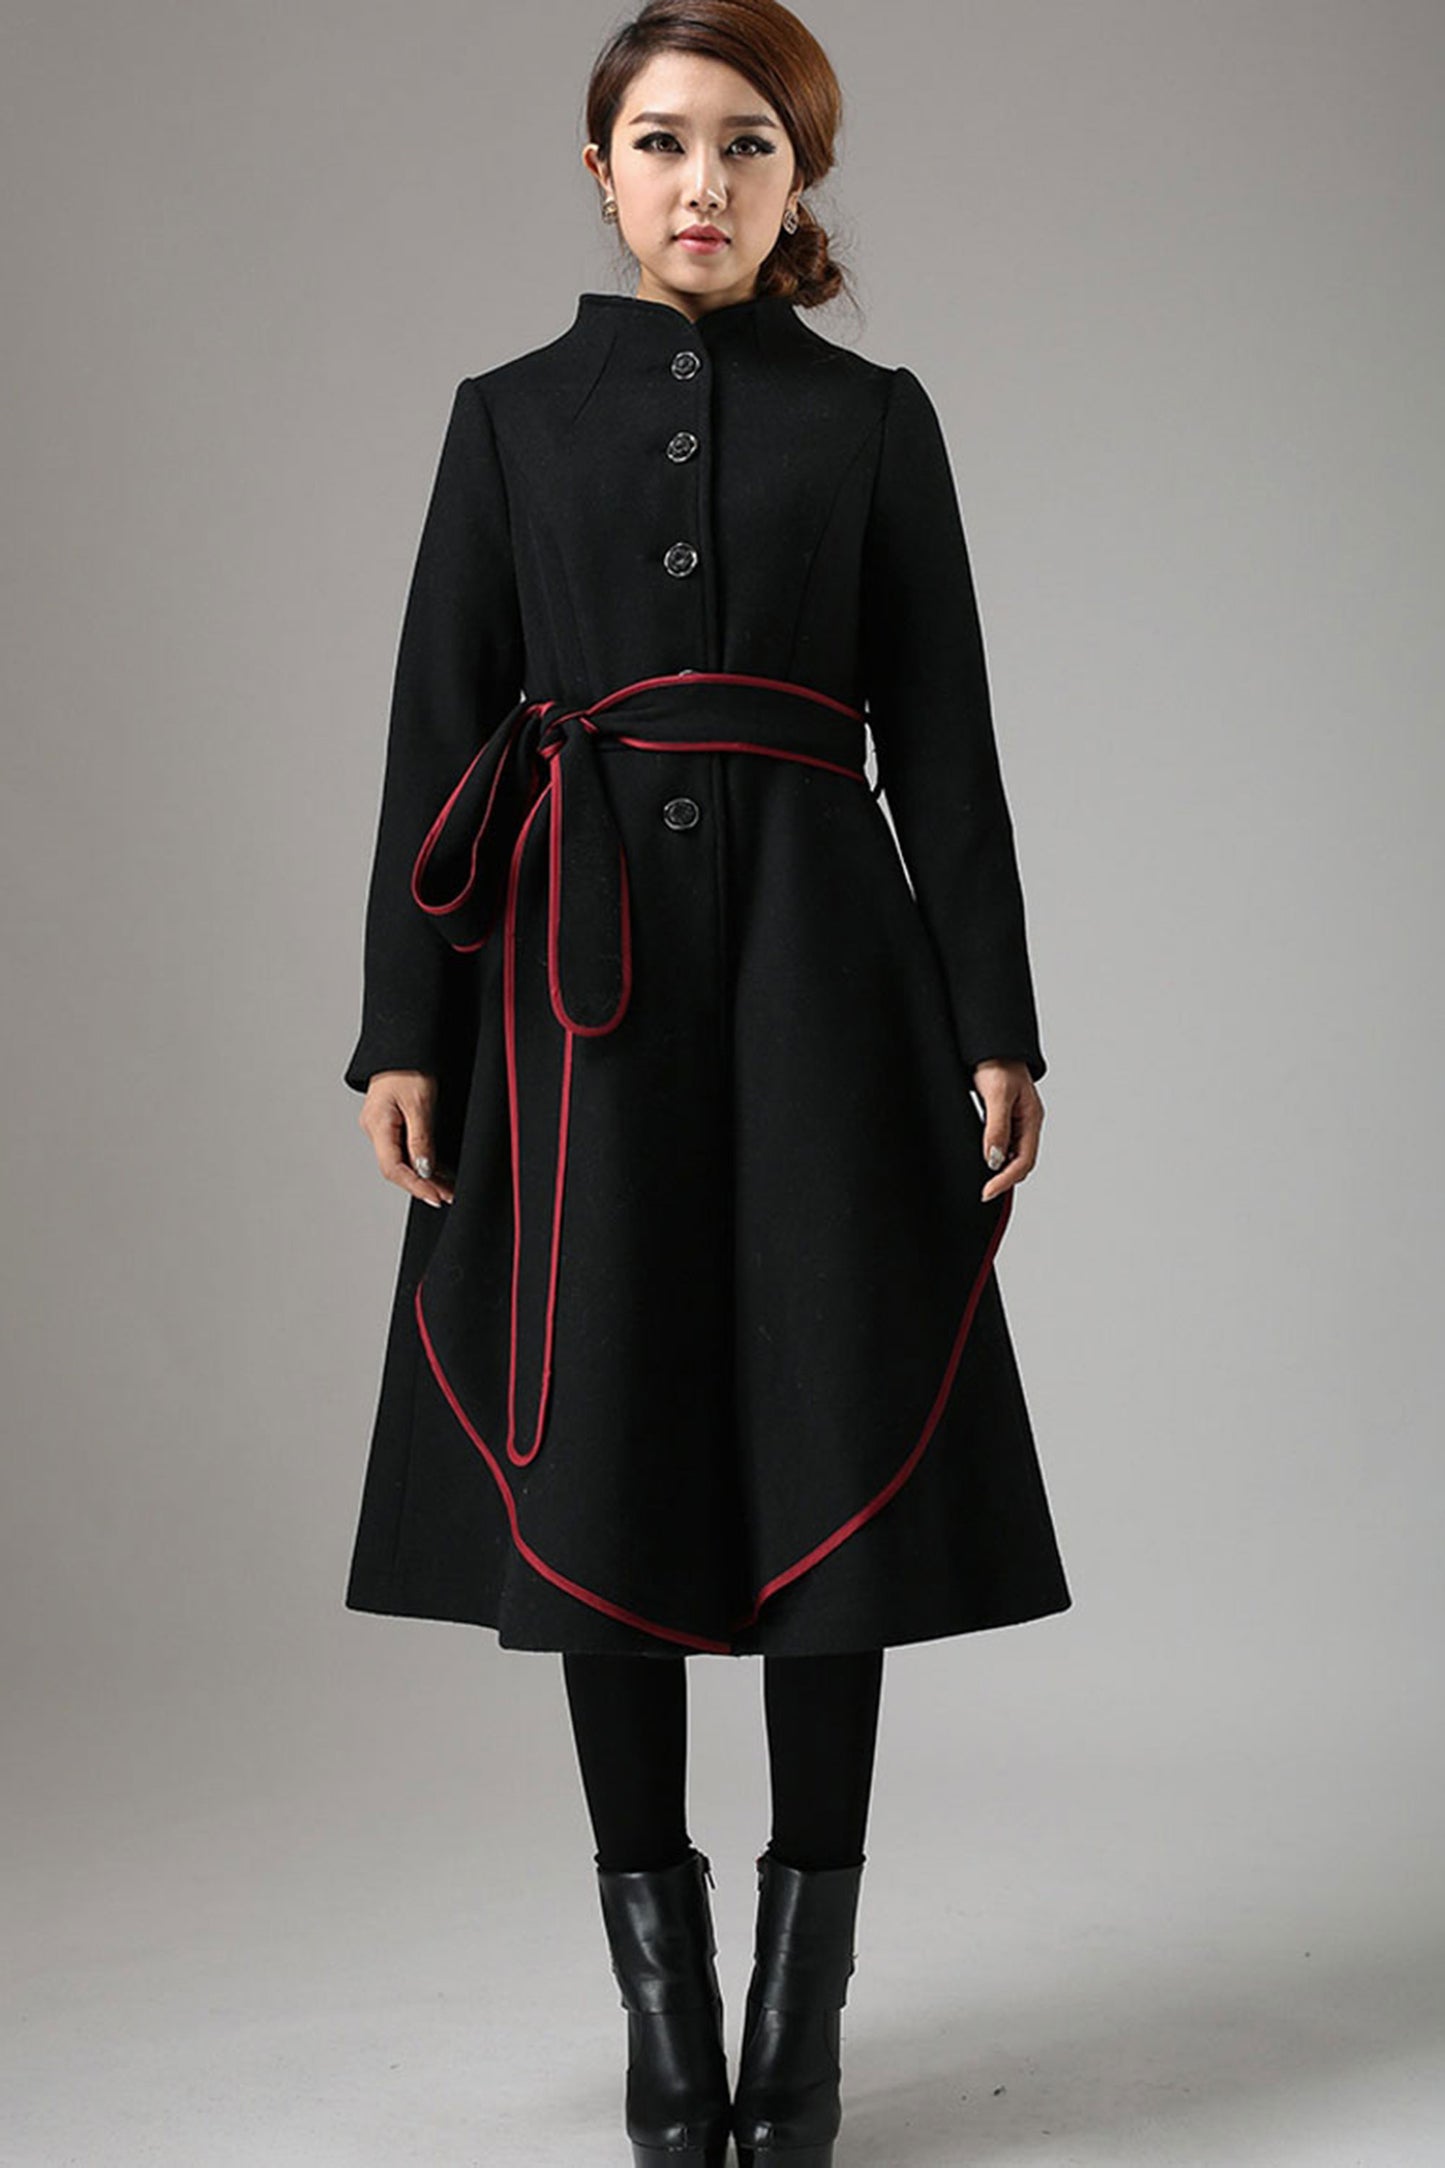 Black Mandarin Collar Coat with Contrasting Piping Detail 0738#